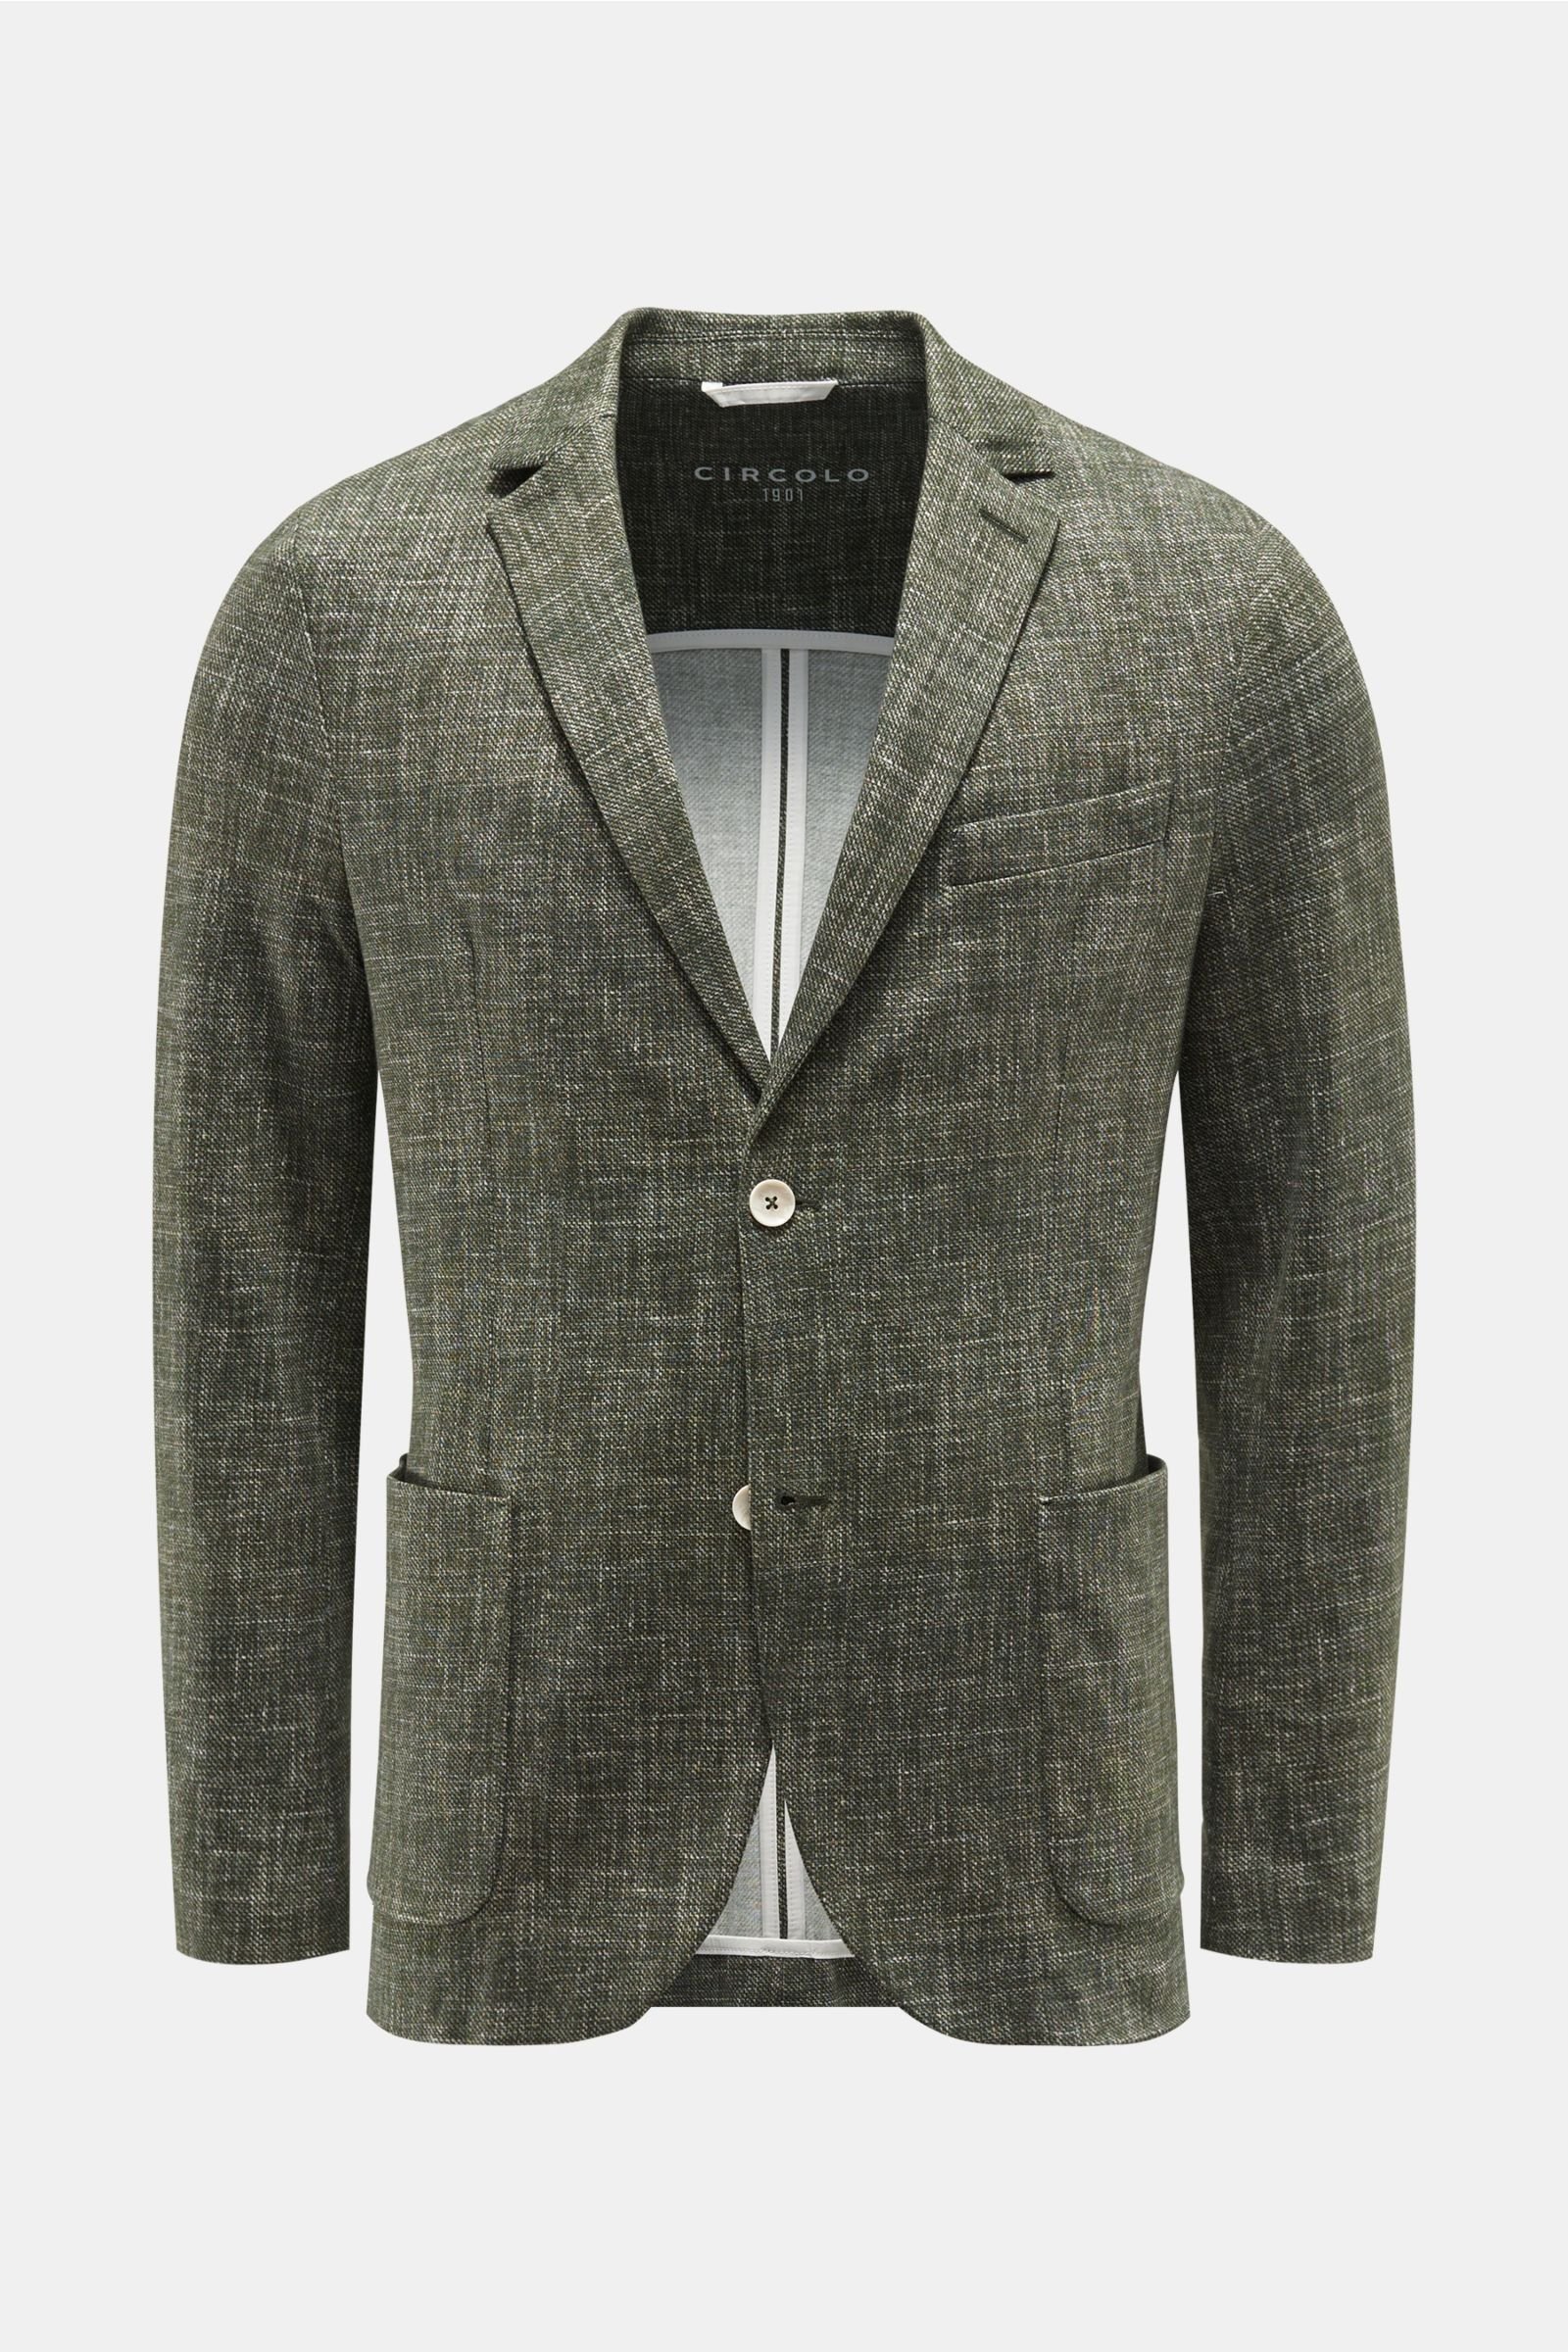 Jersey smart-casual jacket olive patterned